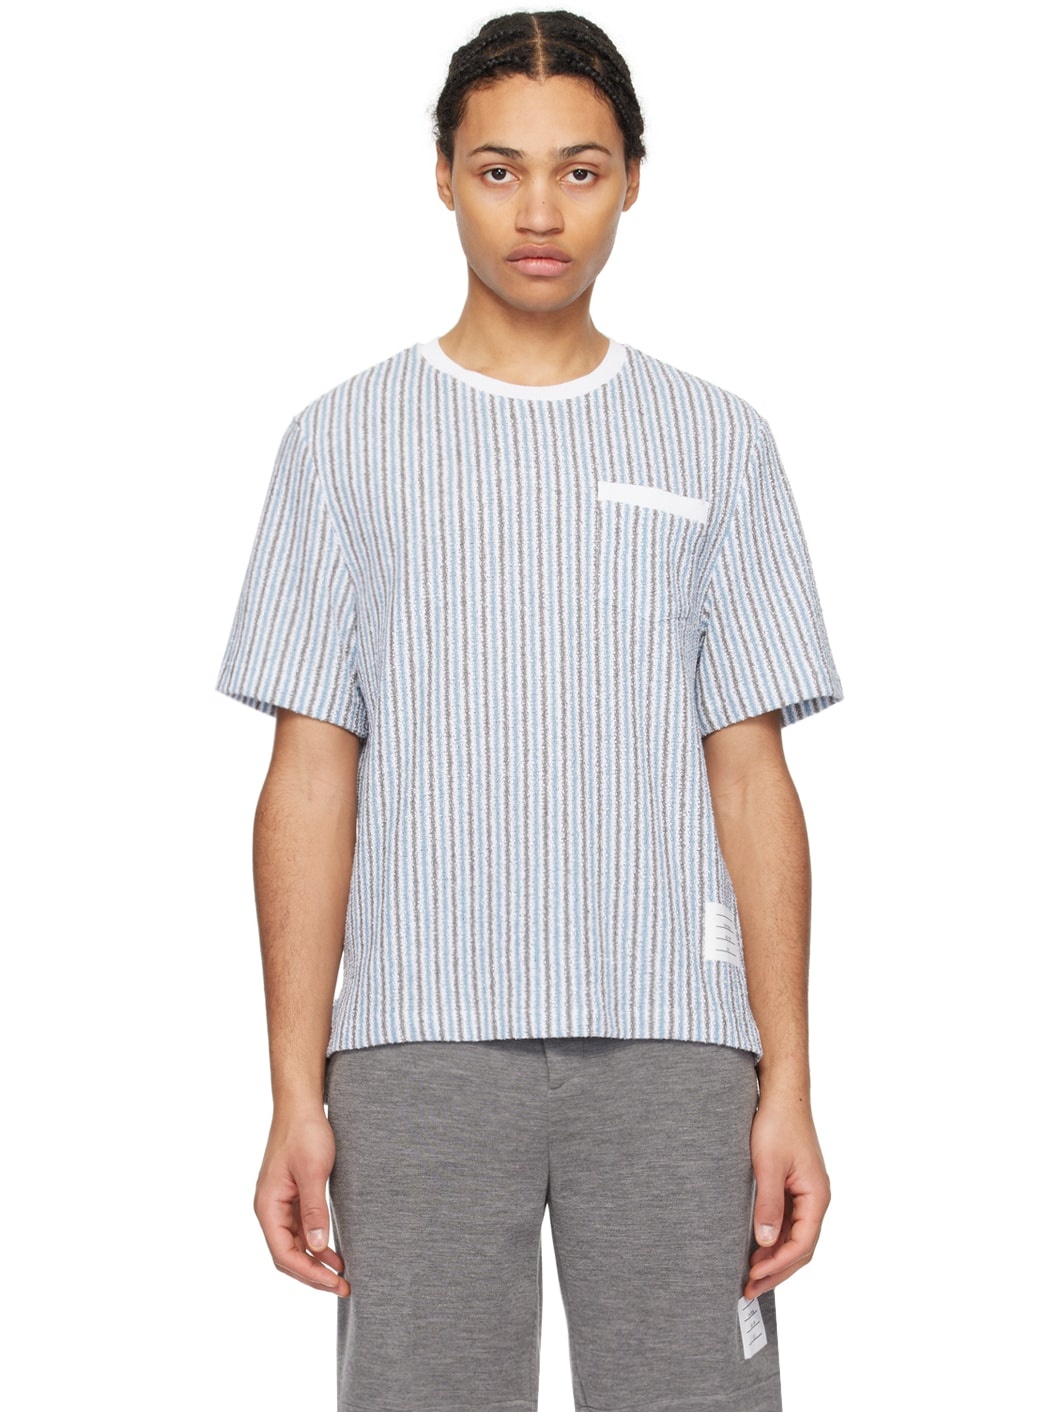 Blue & Gray Striped T-Shirt - 1